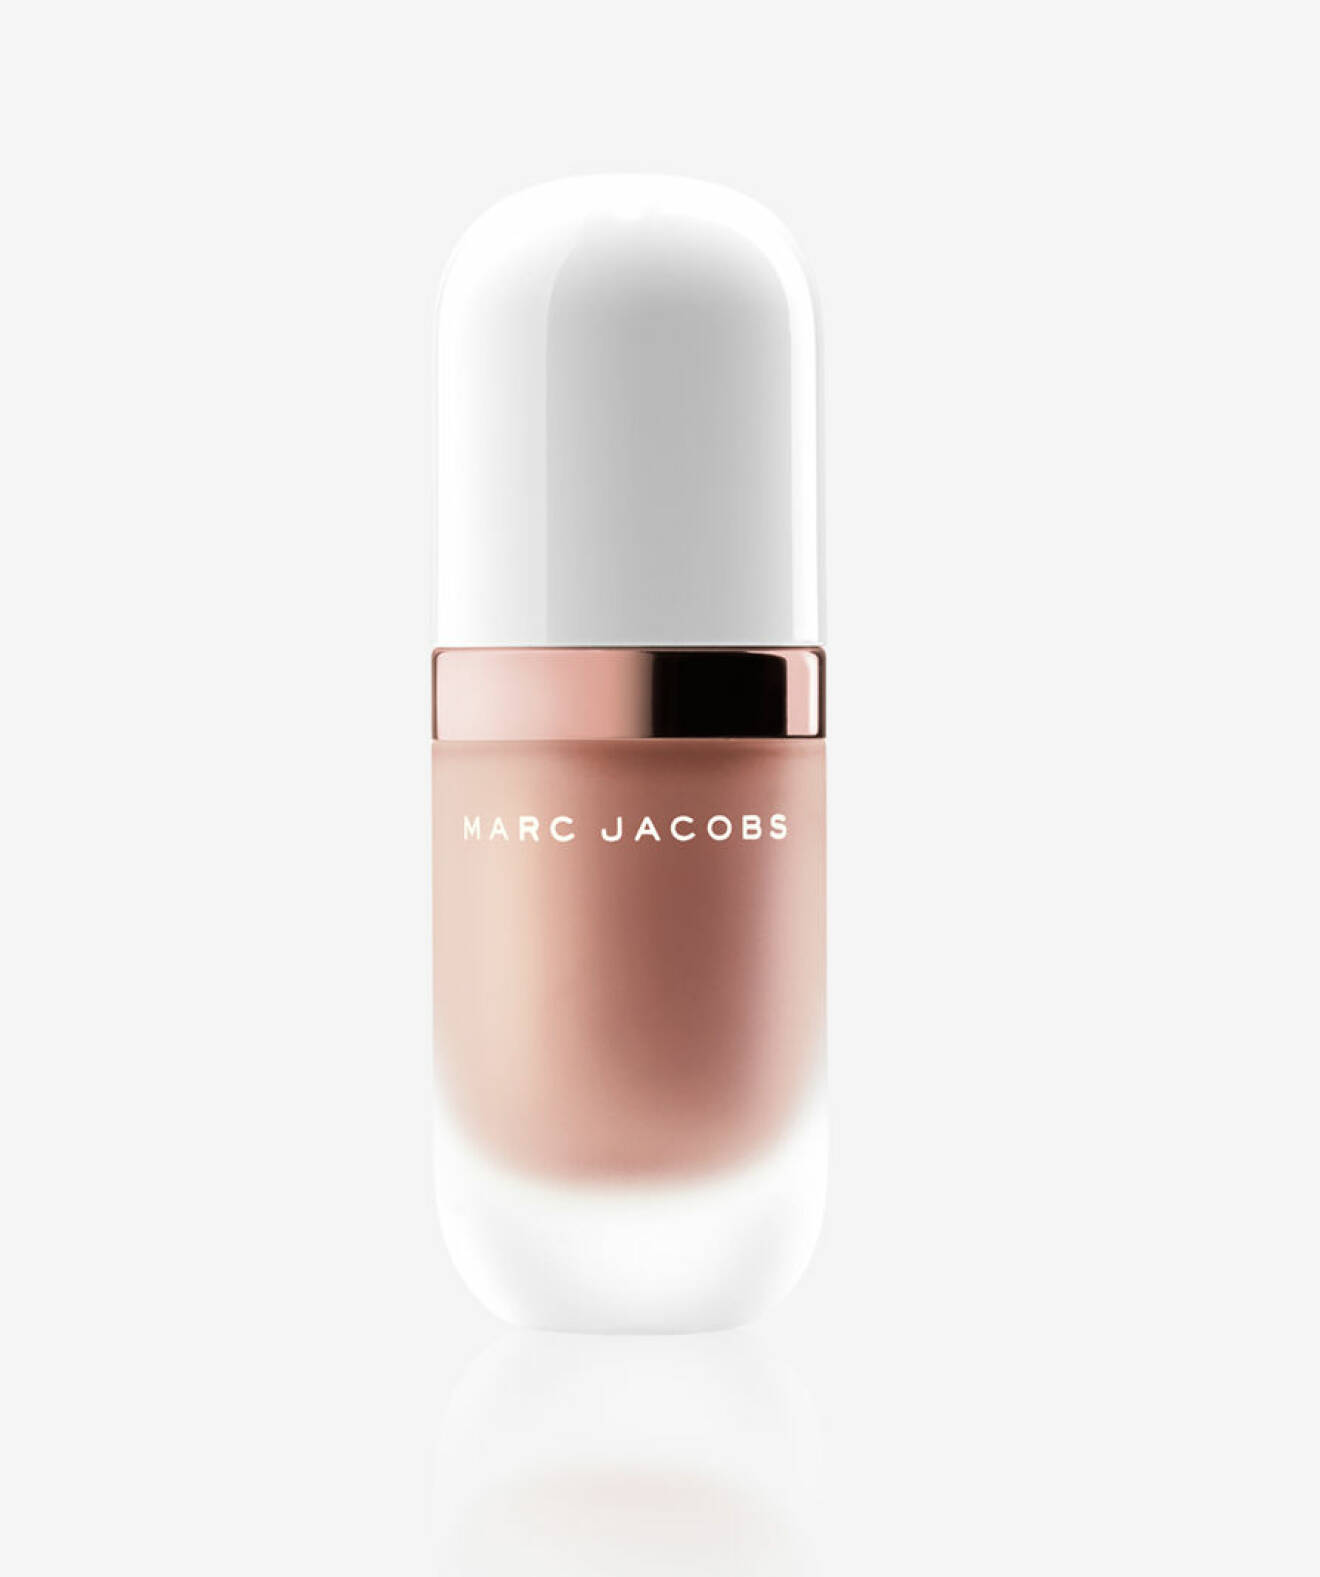 Dew drops coconut gel highlighter, 410 kr,  Marc Jacobs Beauty.